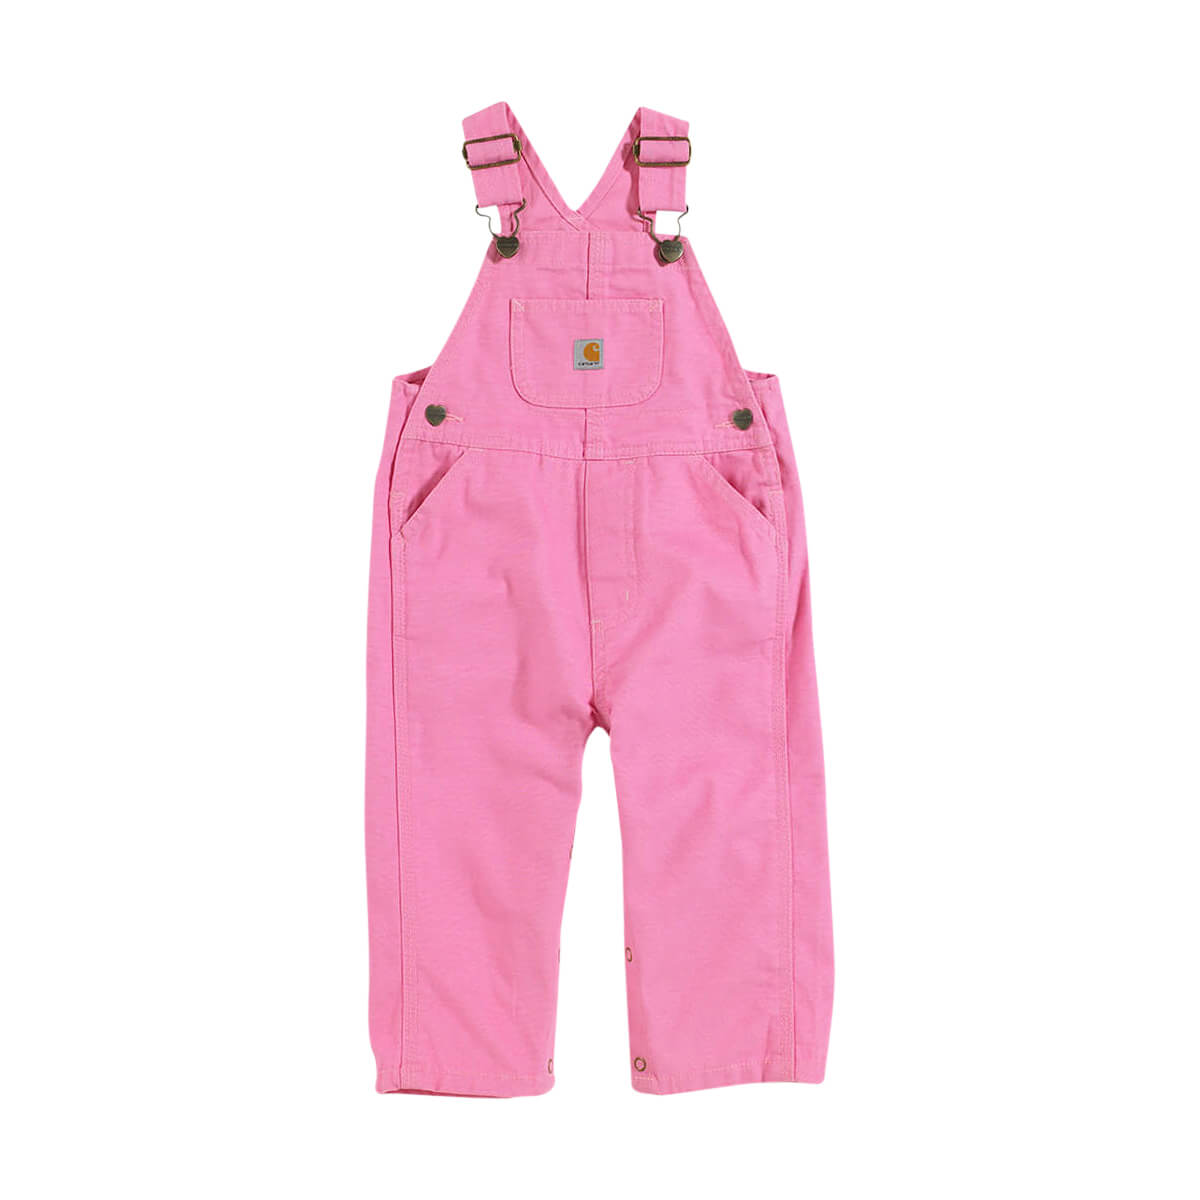 Carhartt Girls' Canvas Bib Overall - Pink